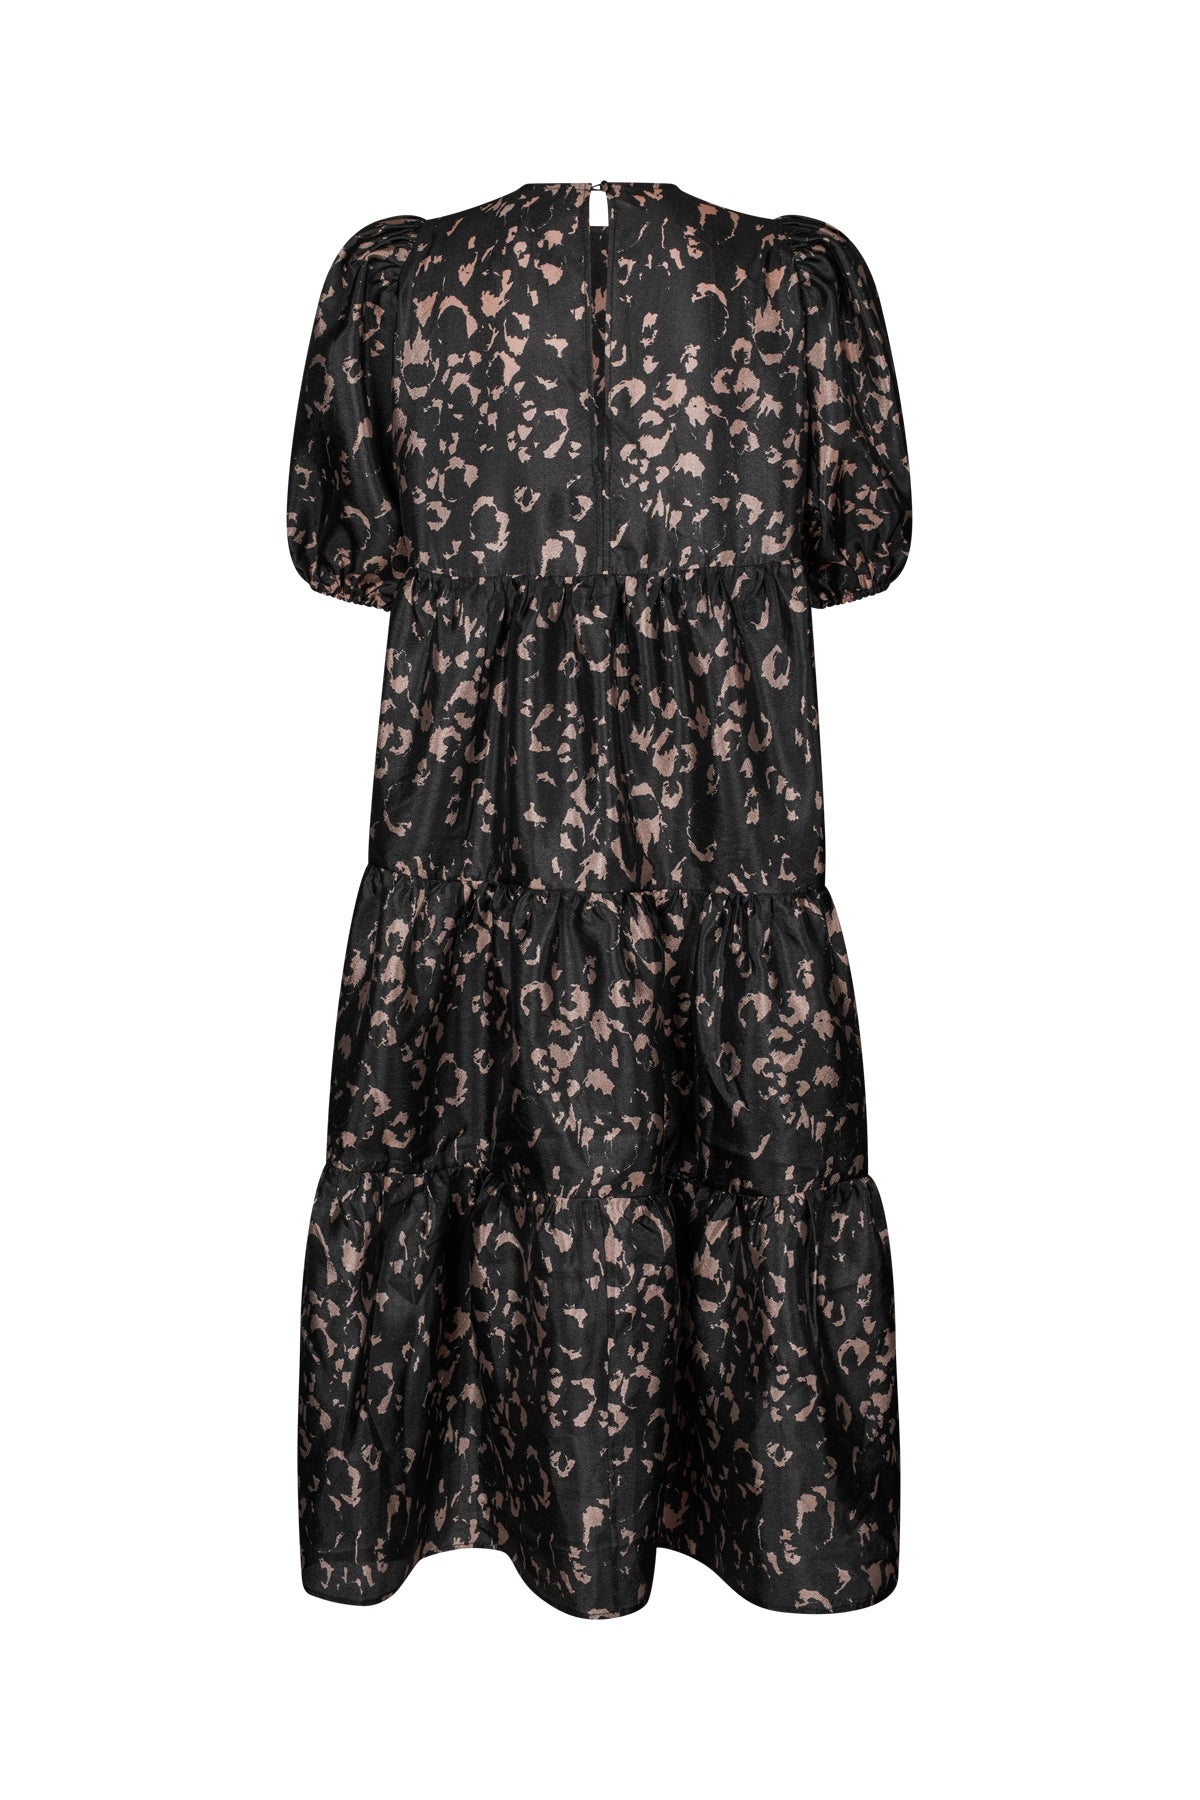 CRAS Lyla Dress Dress 8027 Spot print